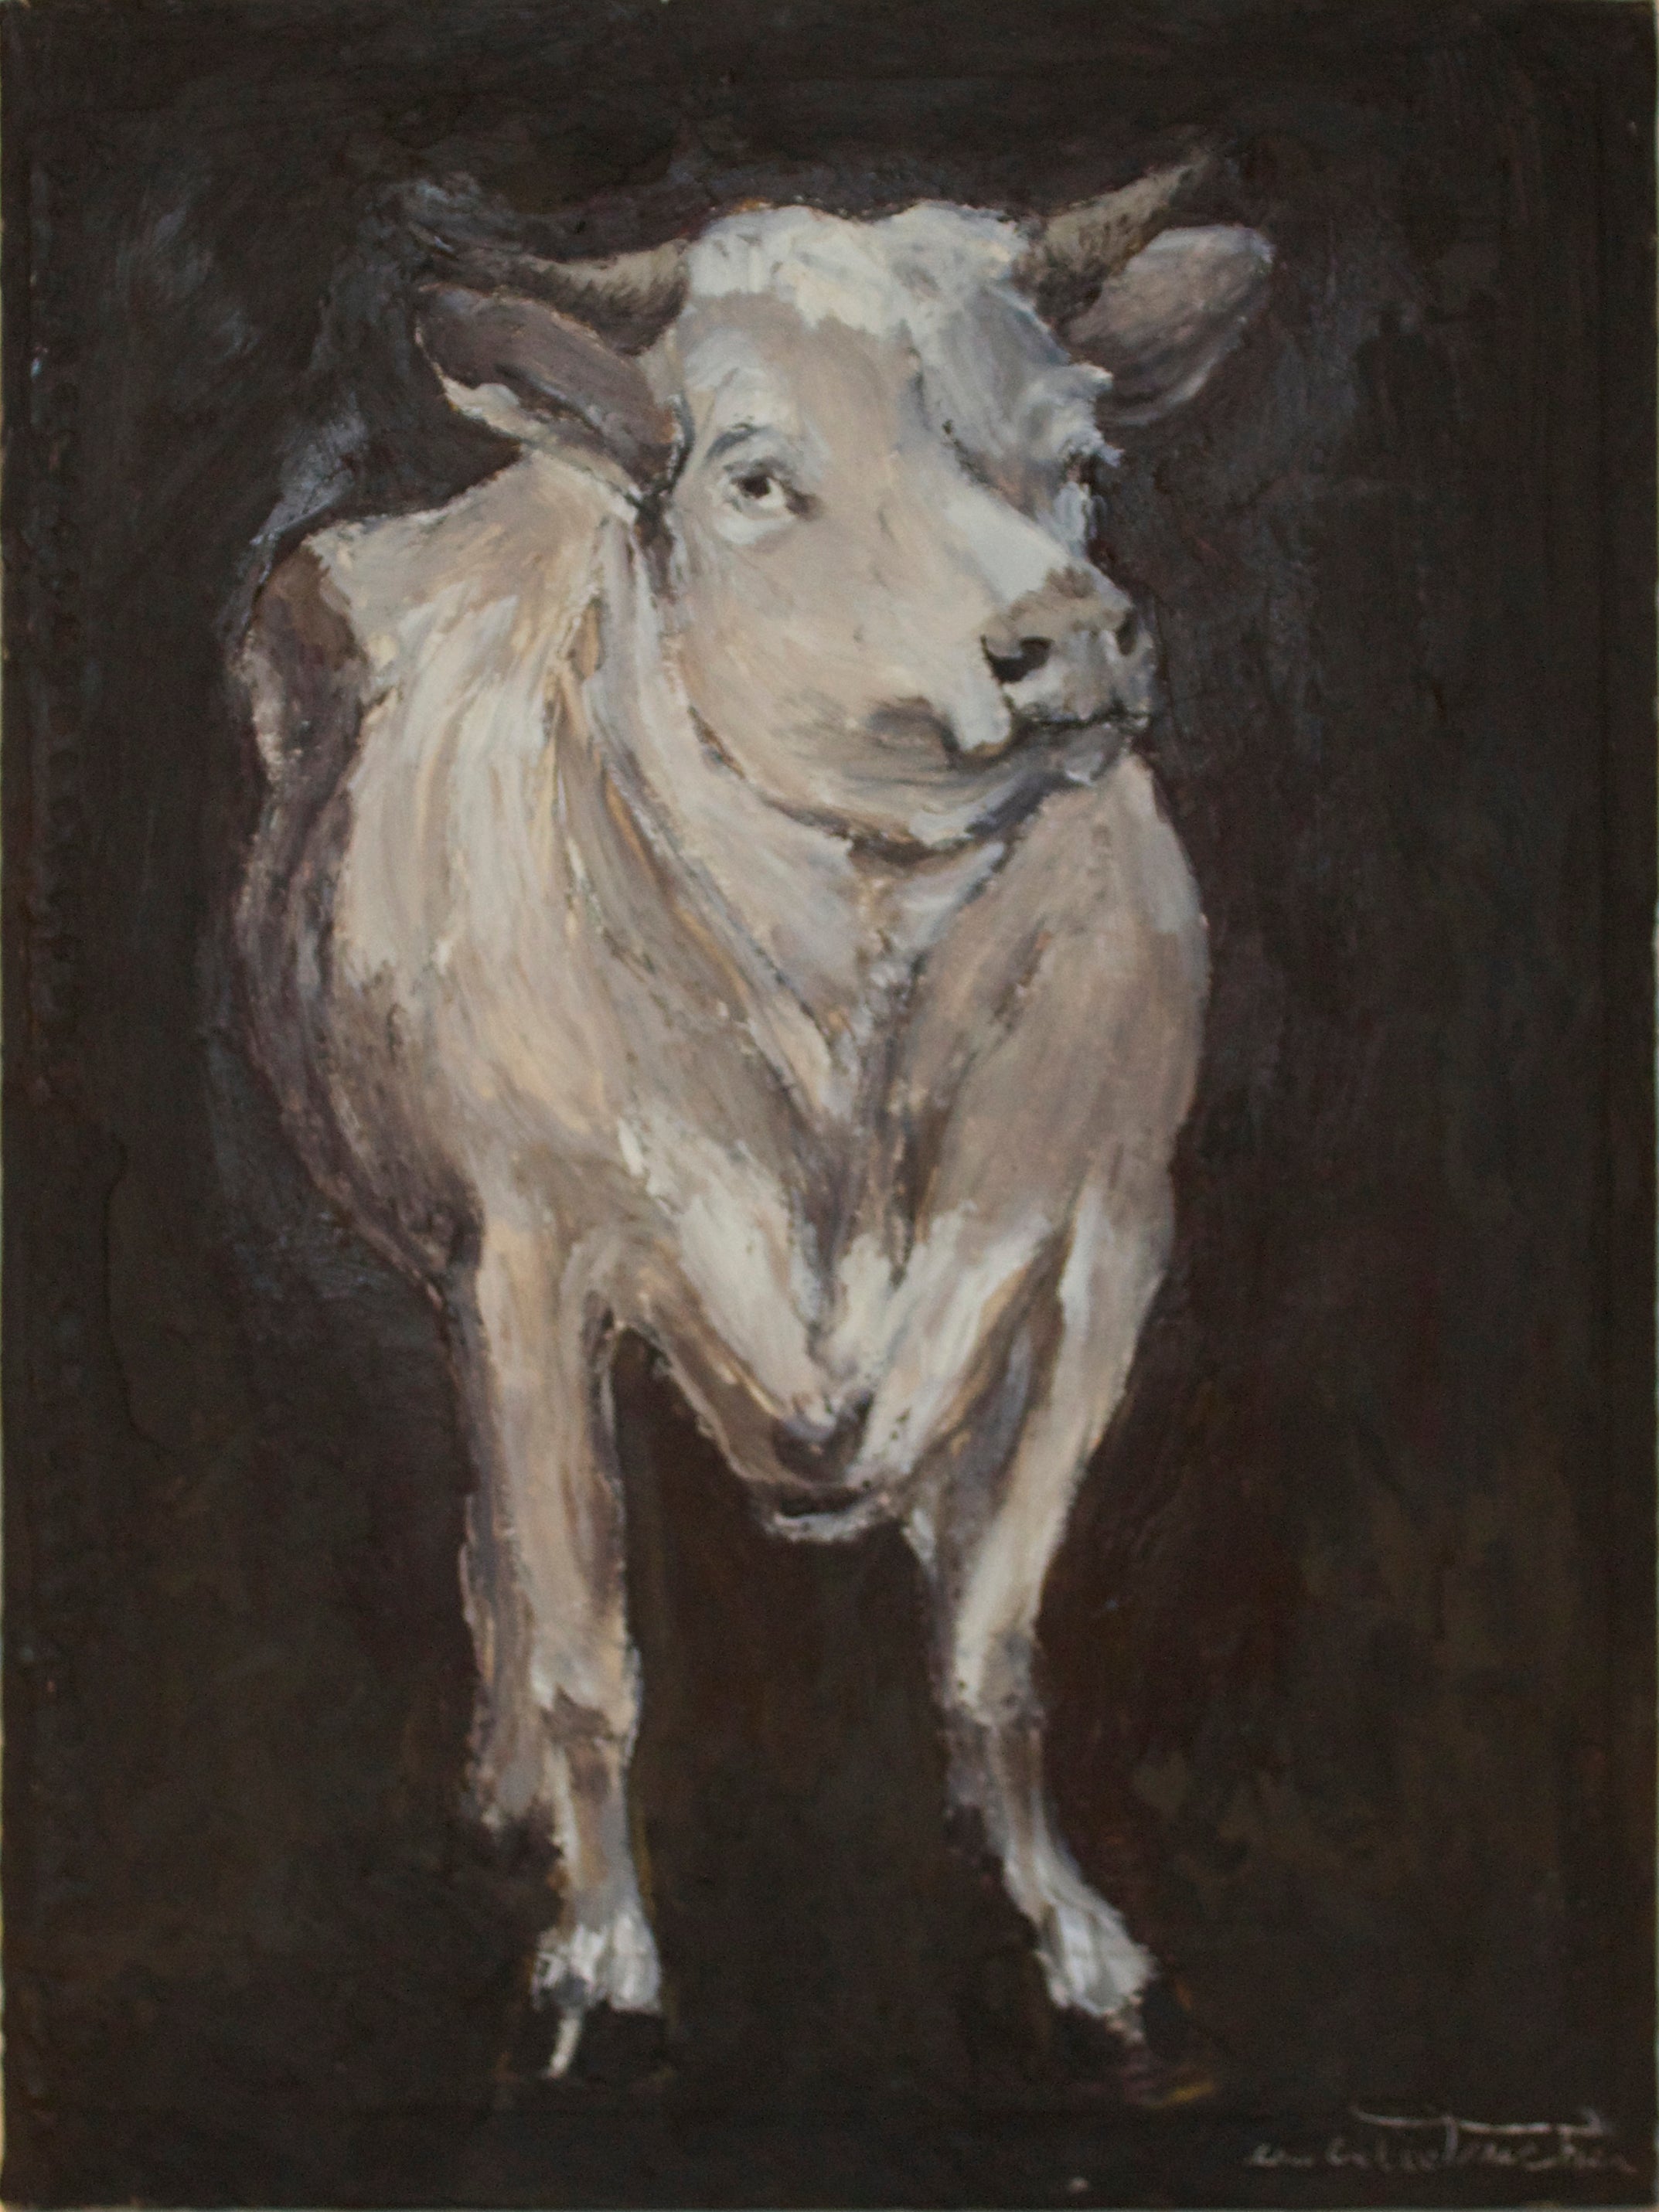 Cow Study Front-Facing View, retouched original canvas print